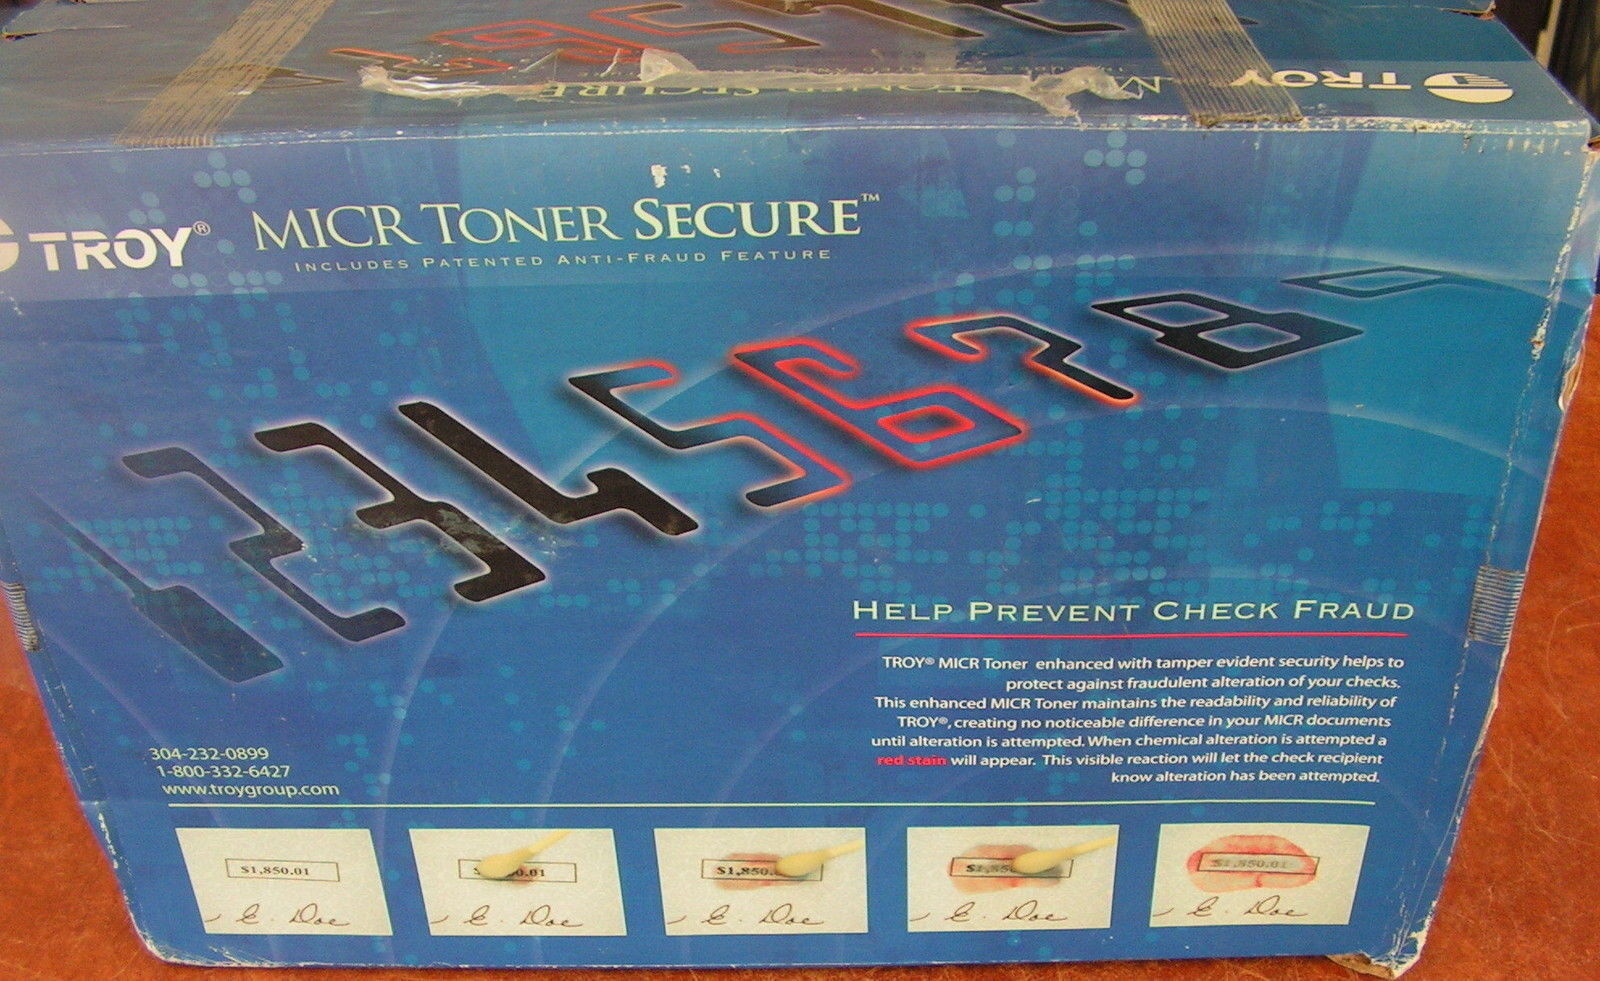 Genuine Troy Micr Toner Secure 02-81078-001 for 4100 Printers